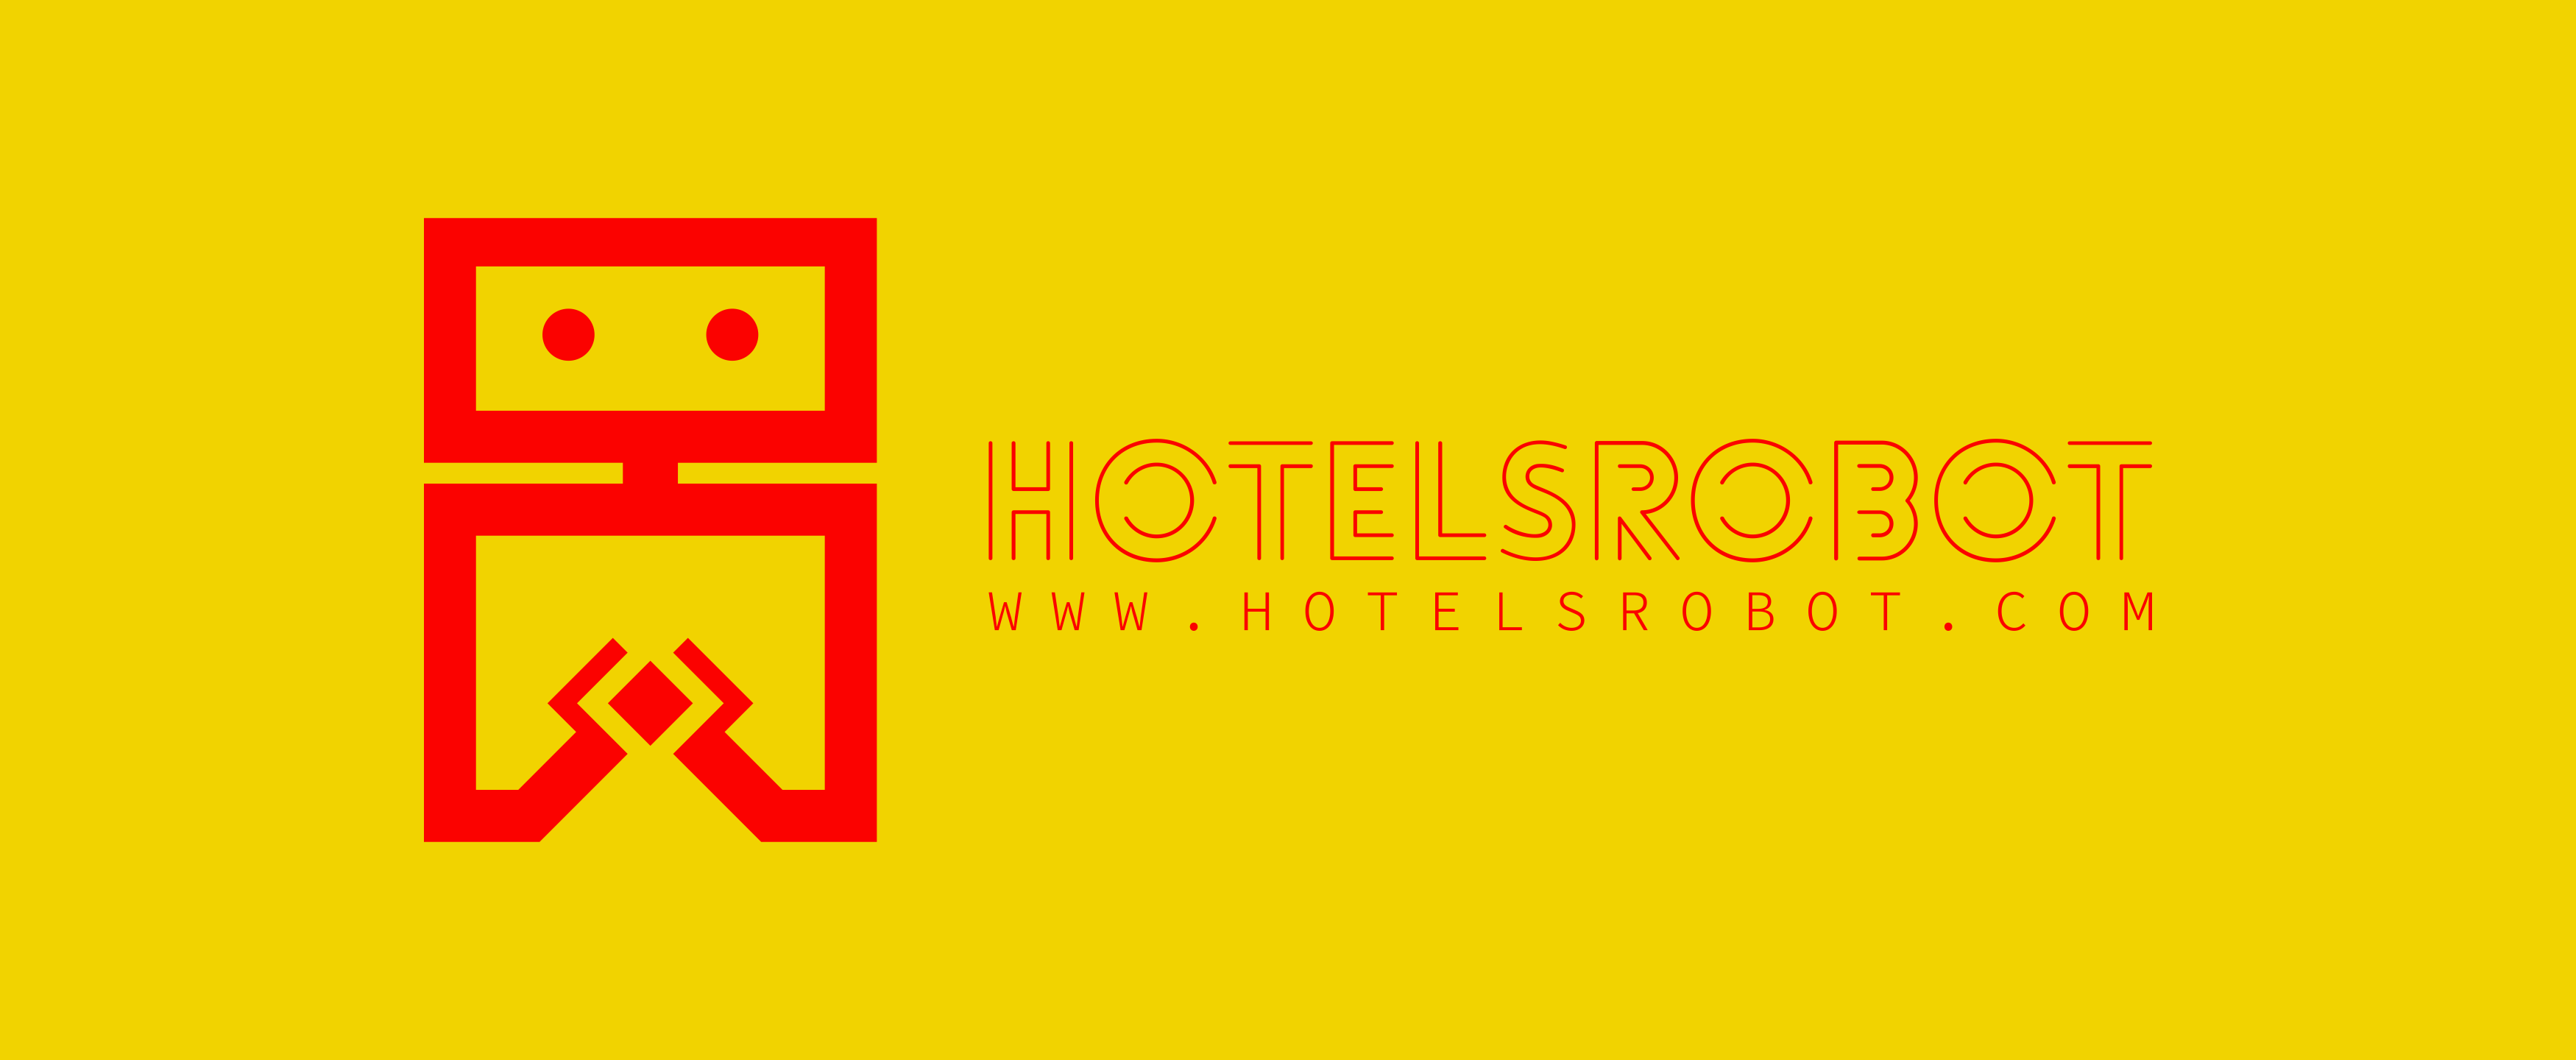 HotelsRobot